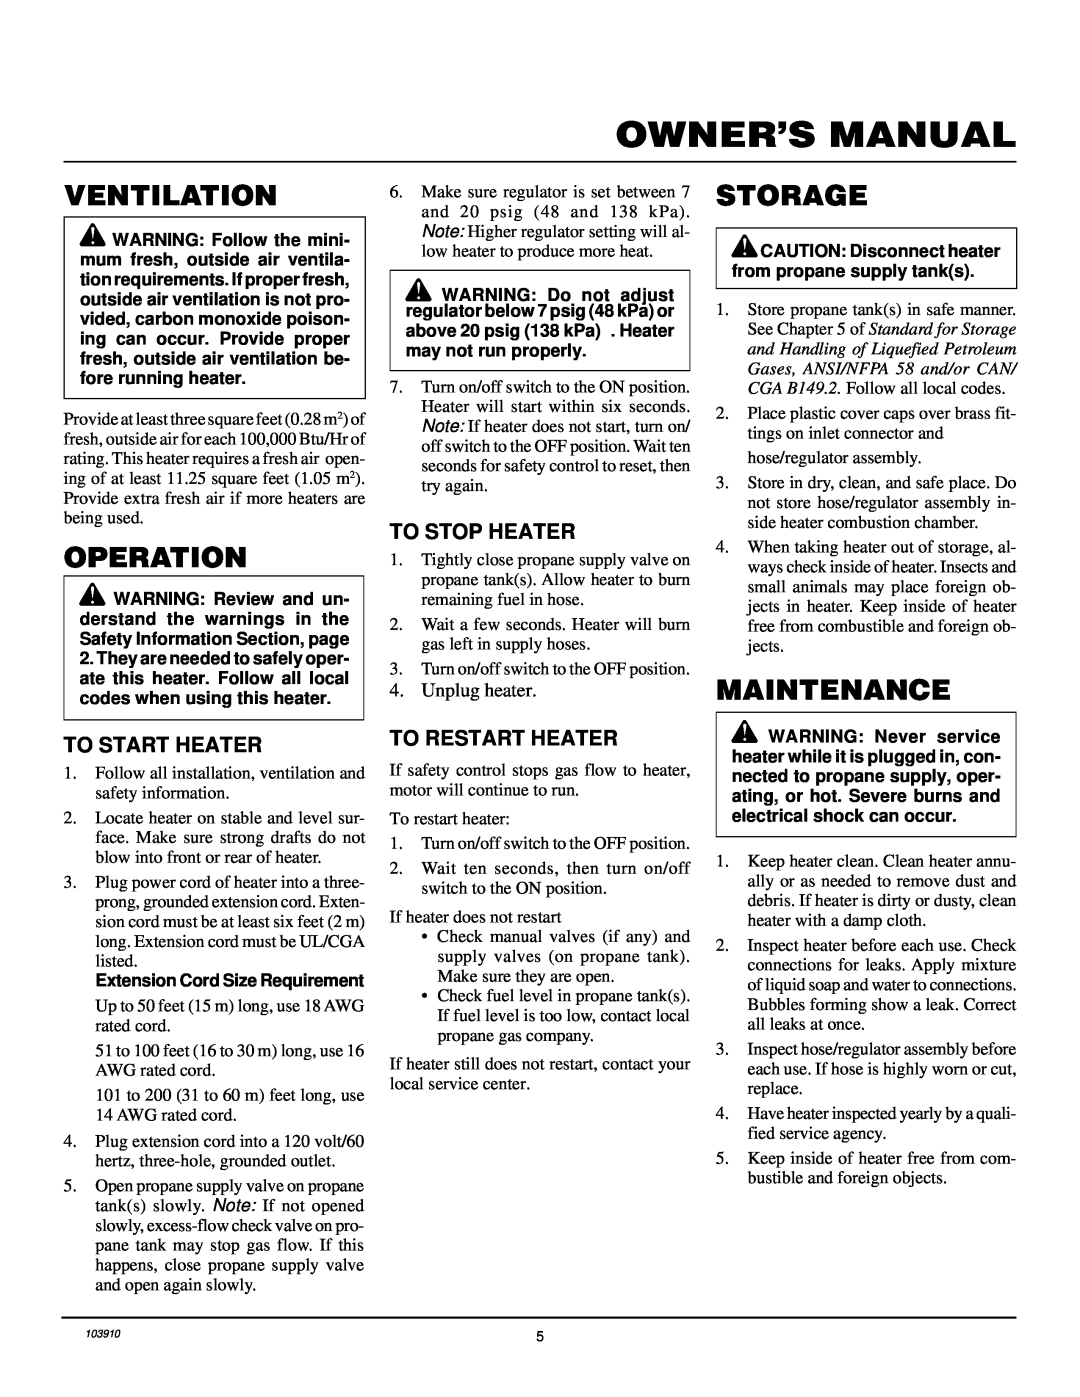 Desa RCLP375B owner manual Ventilation, Operation, Storage, Maintenance, Extension Cord Size Requirement 